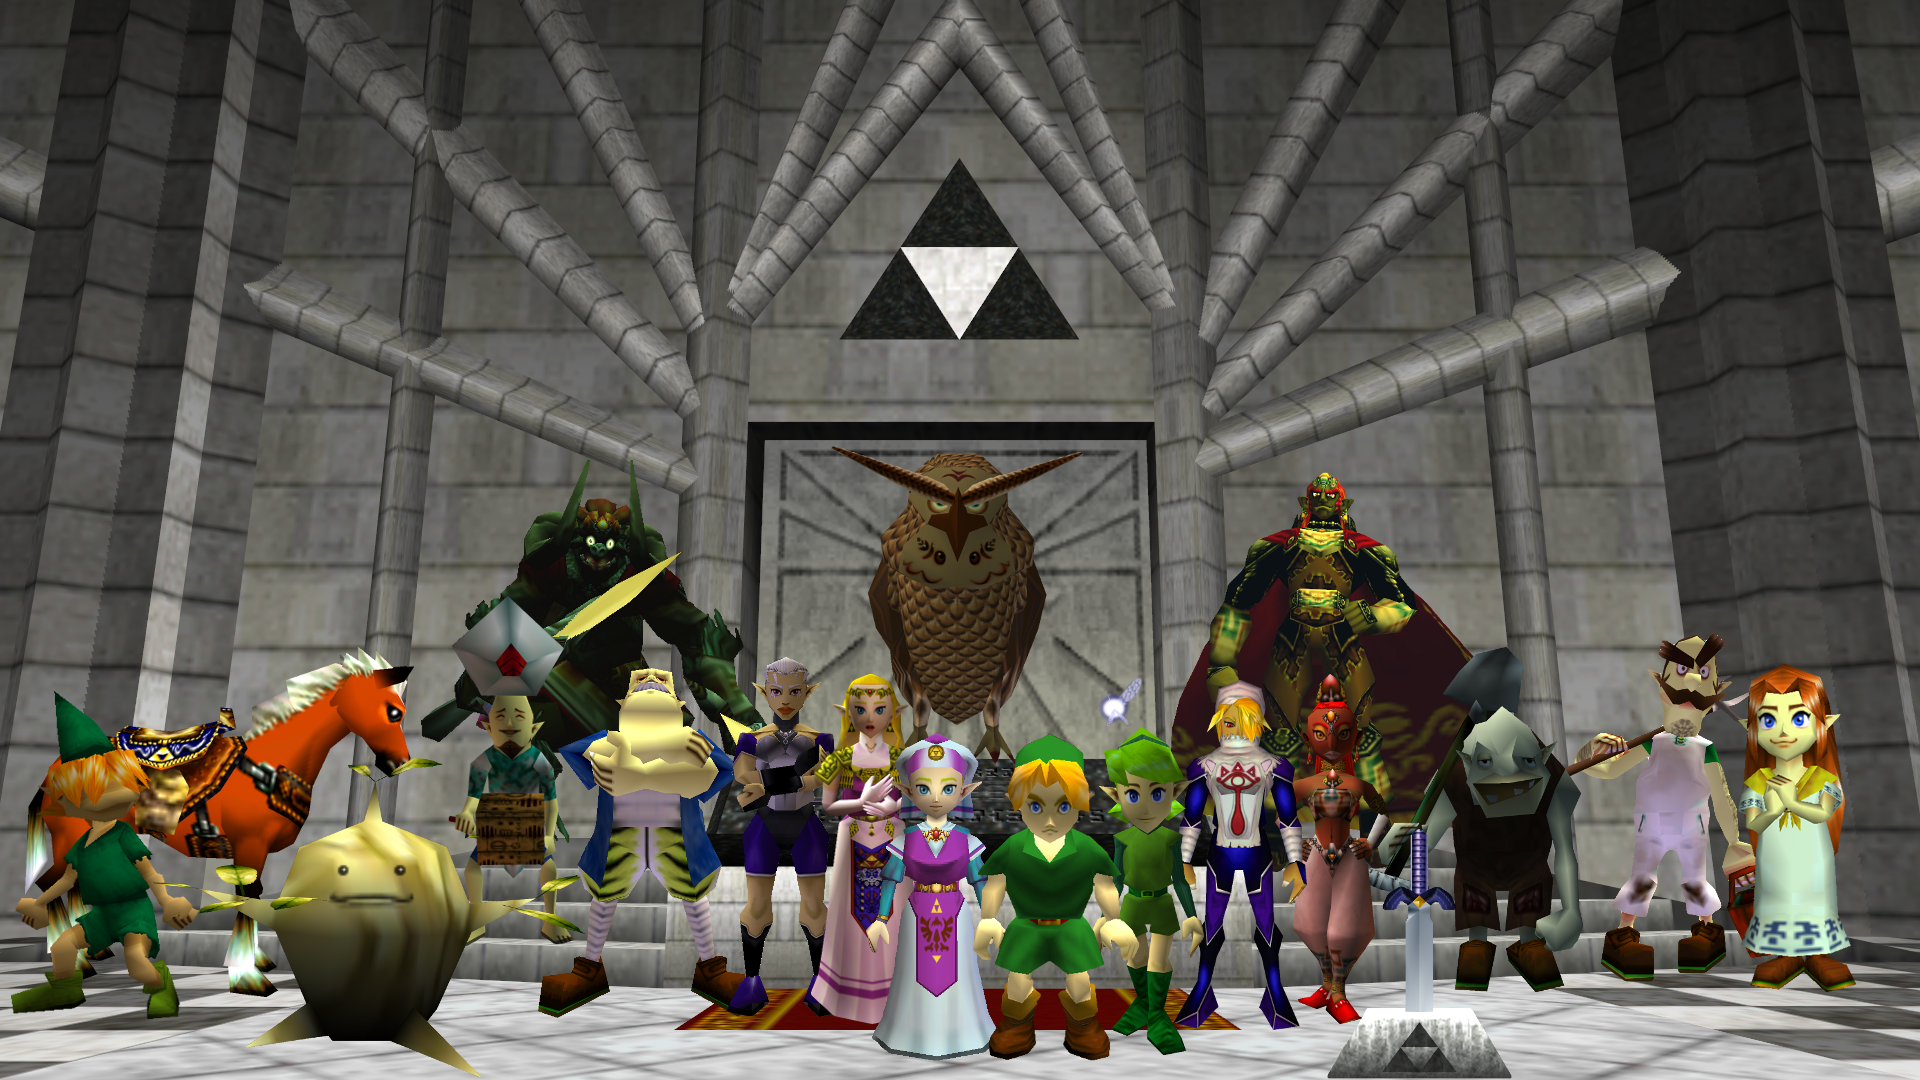 Ocarina of Time Wallpaper - The Legend of Zelda: Ocarina of Time ...